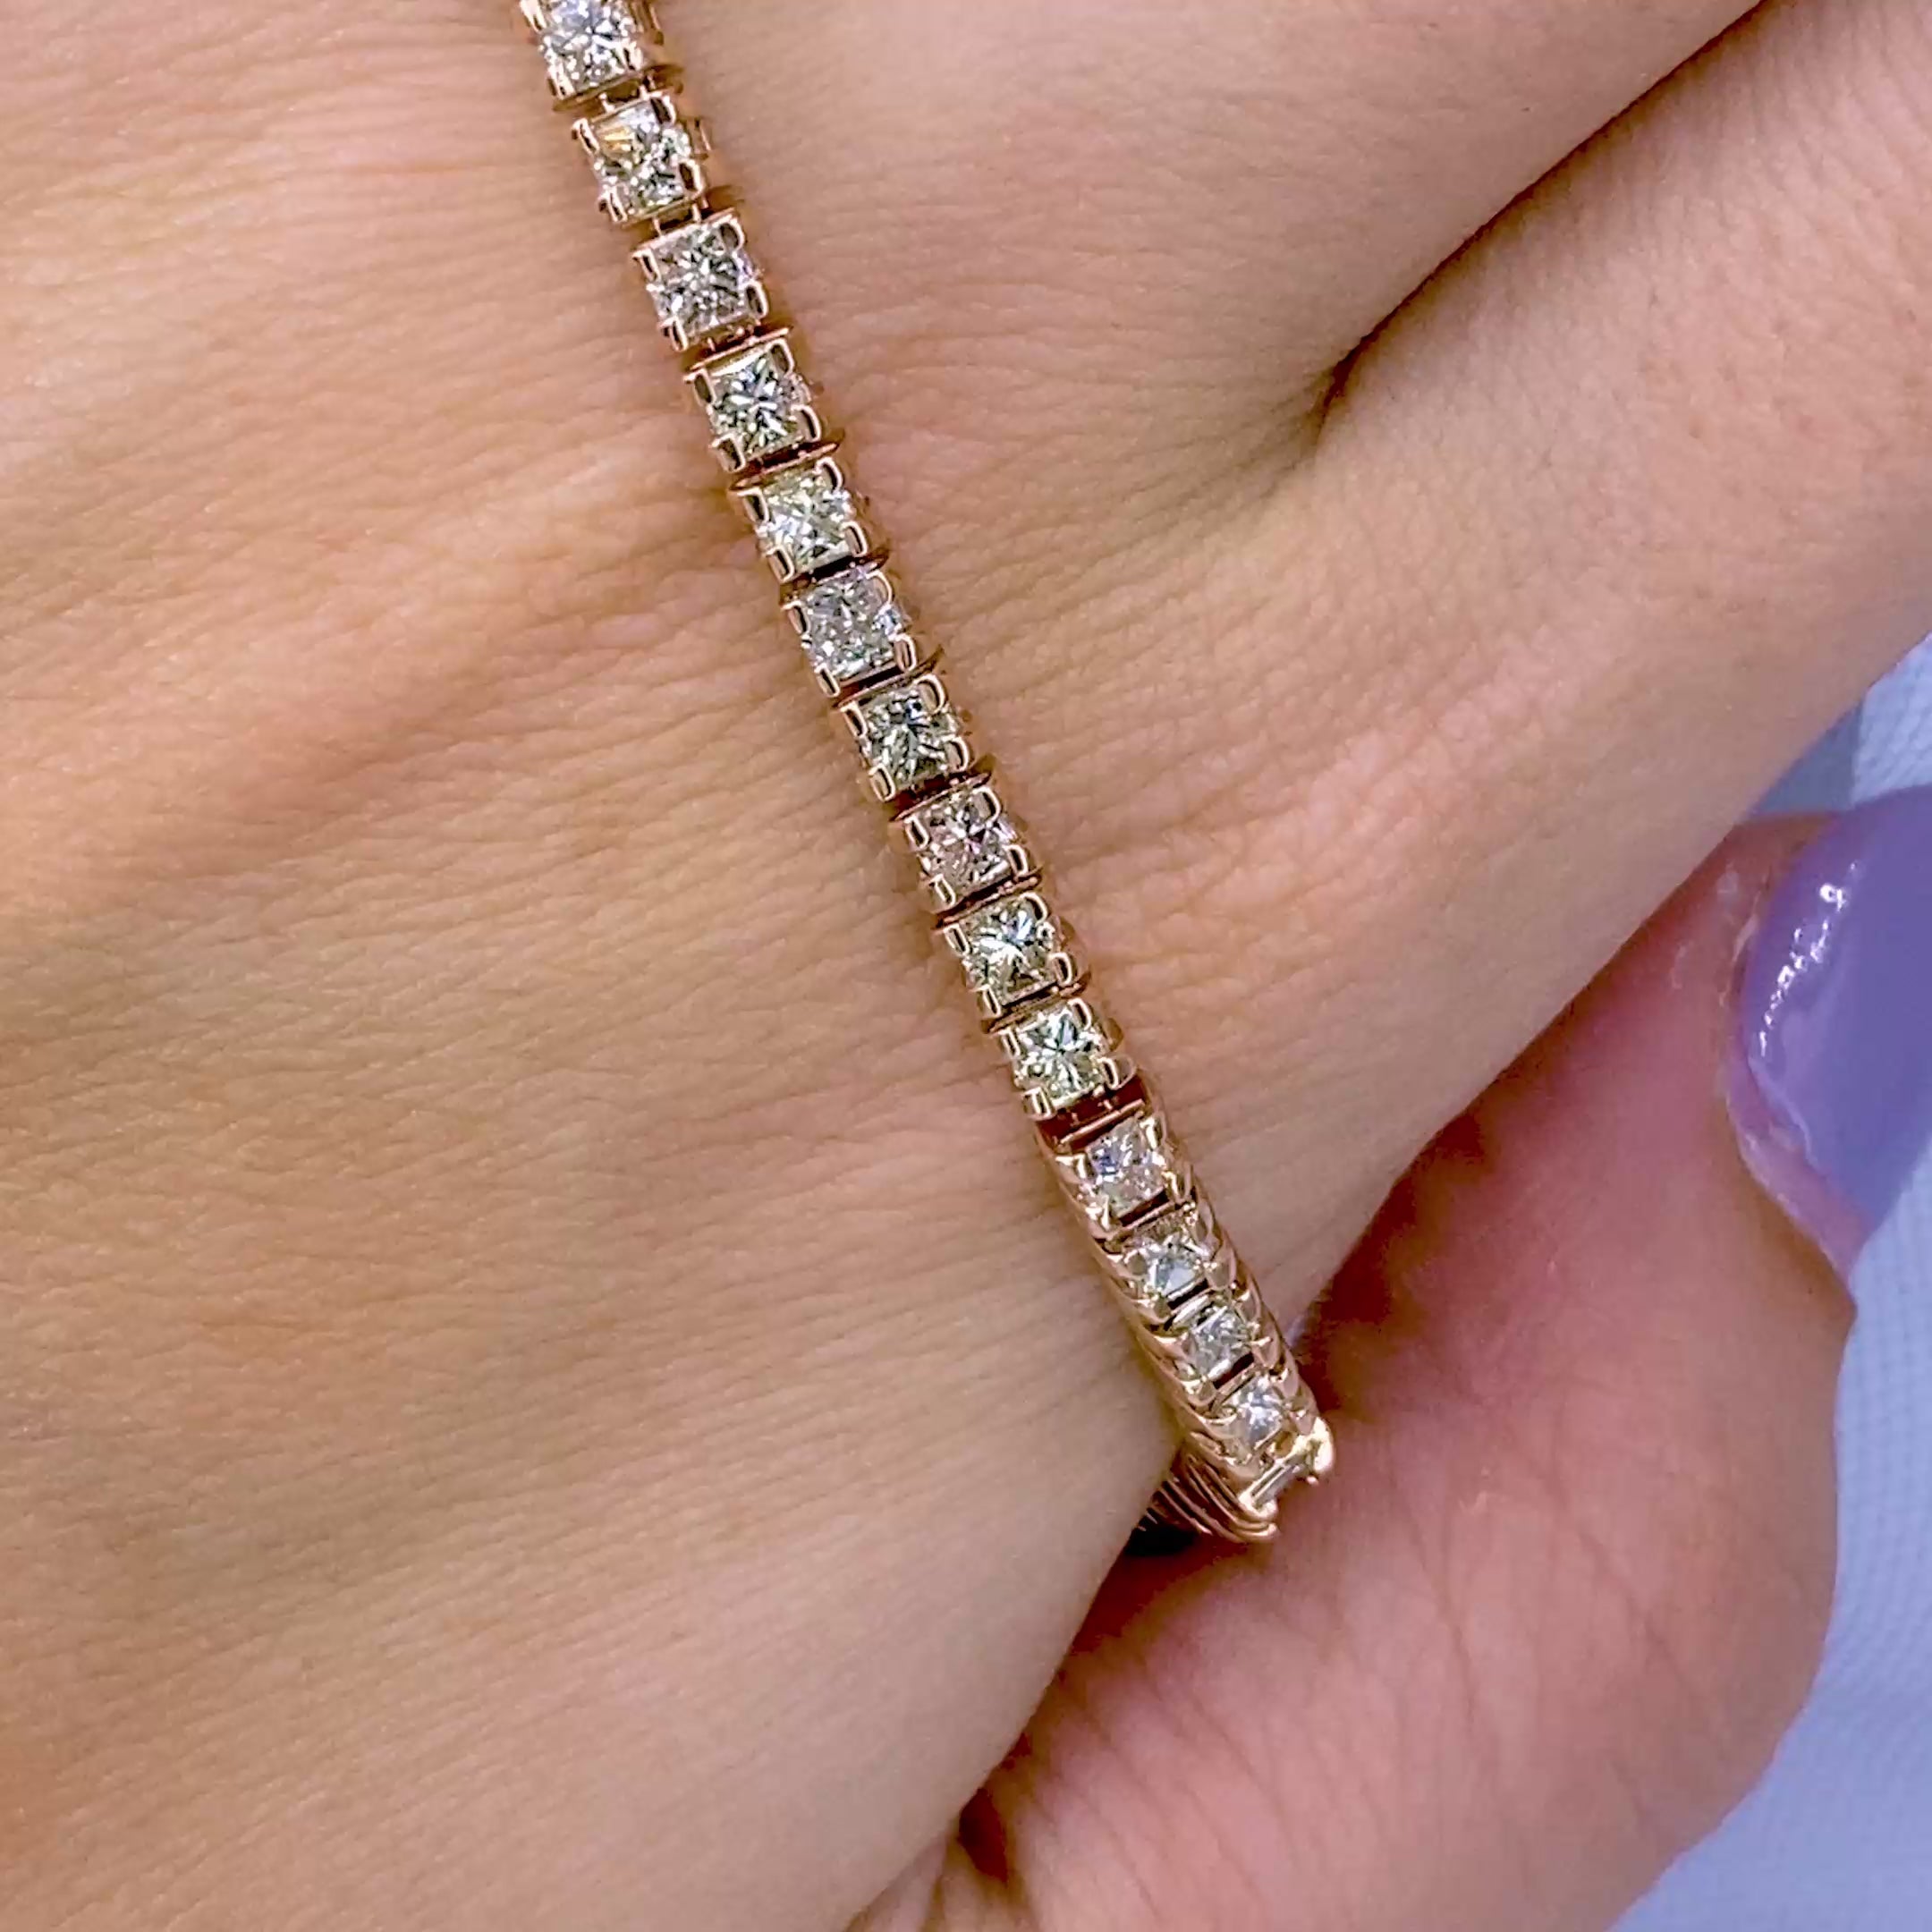 Exquisite 9.00CT Princess Cut Diamond Tennis Bracelet in 14KT Rose Gold